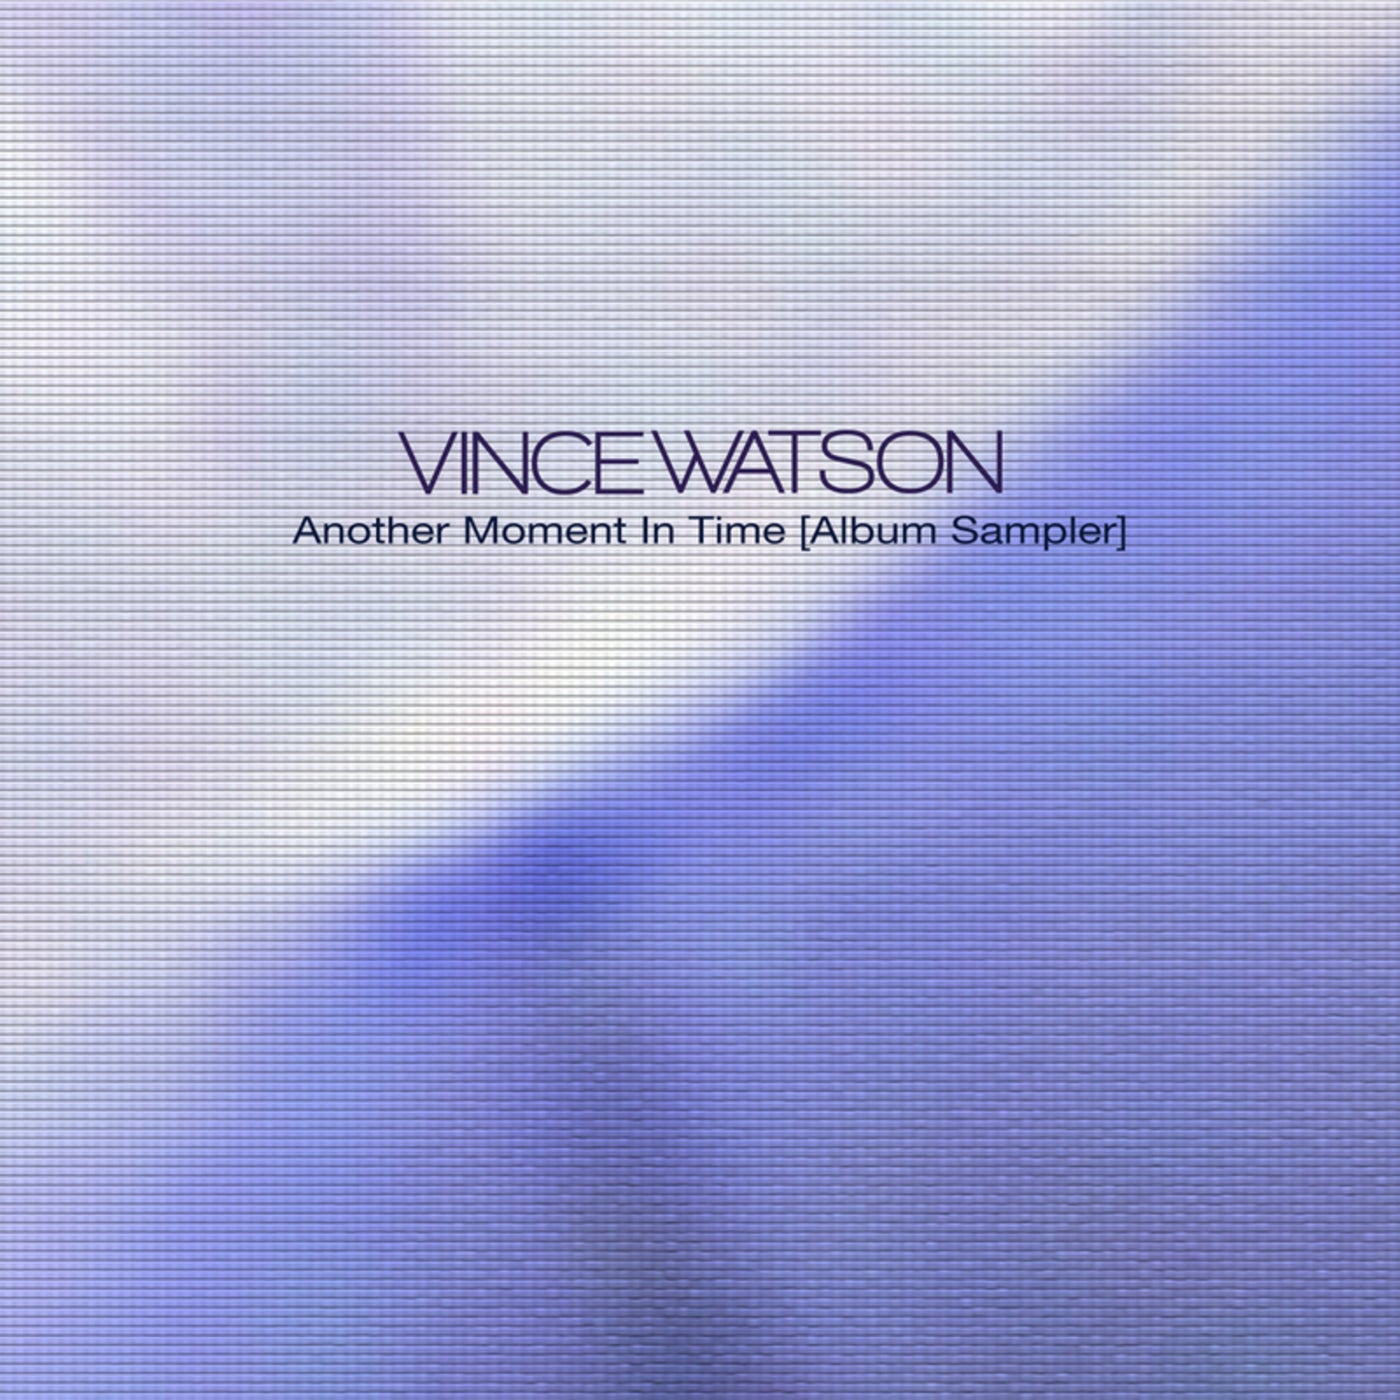 Vince Watson Music & Downloads on Beatport